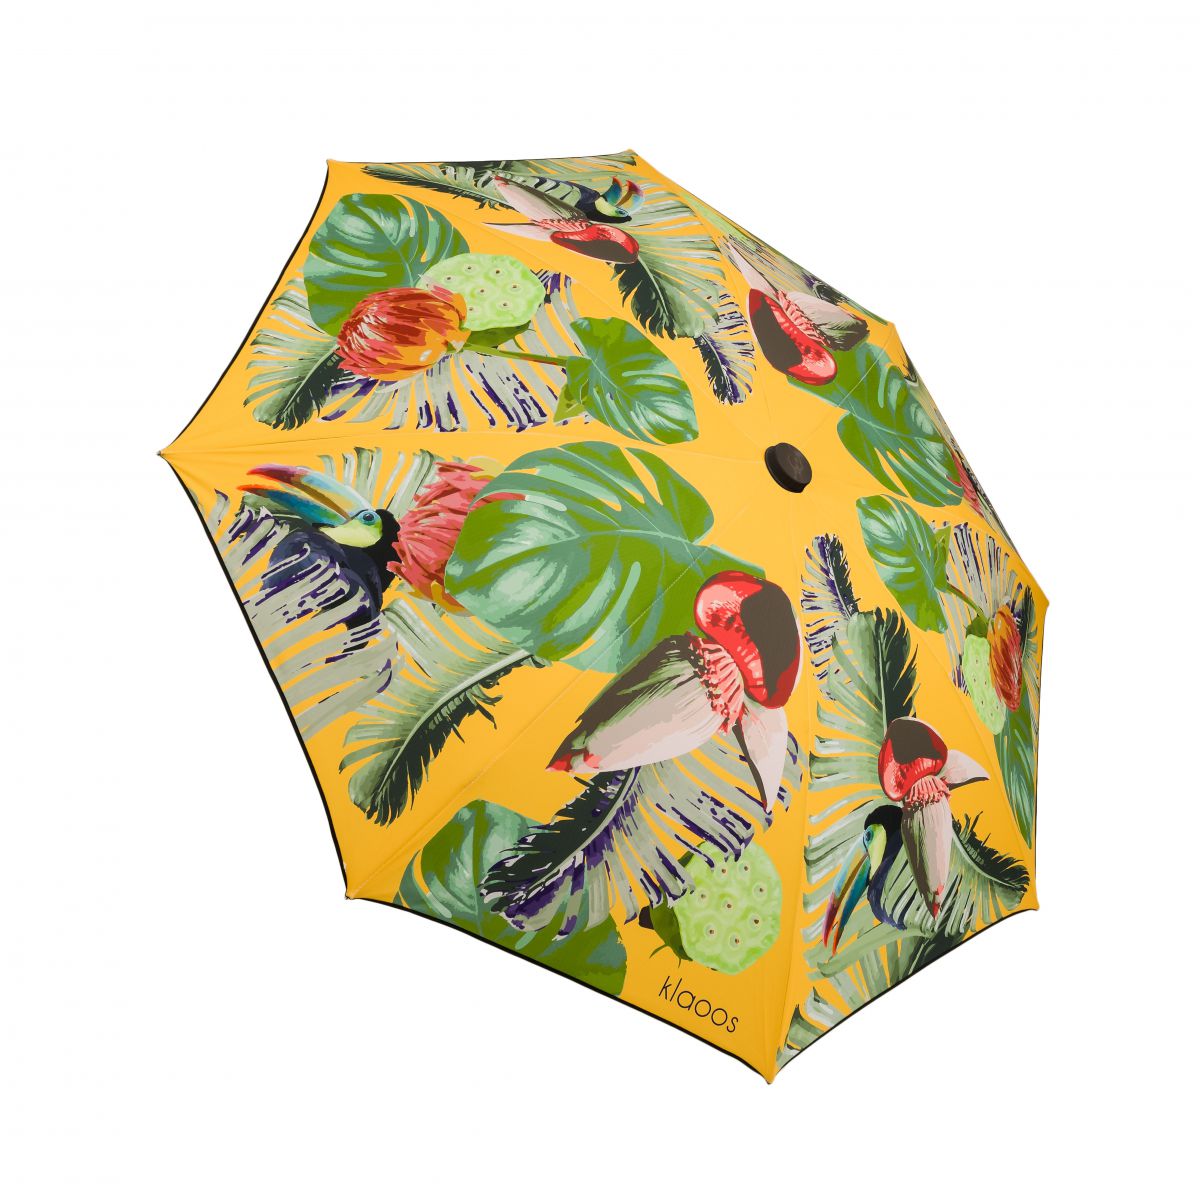 parasol de jardin